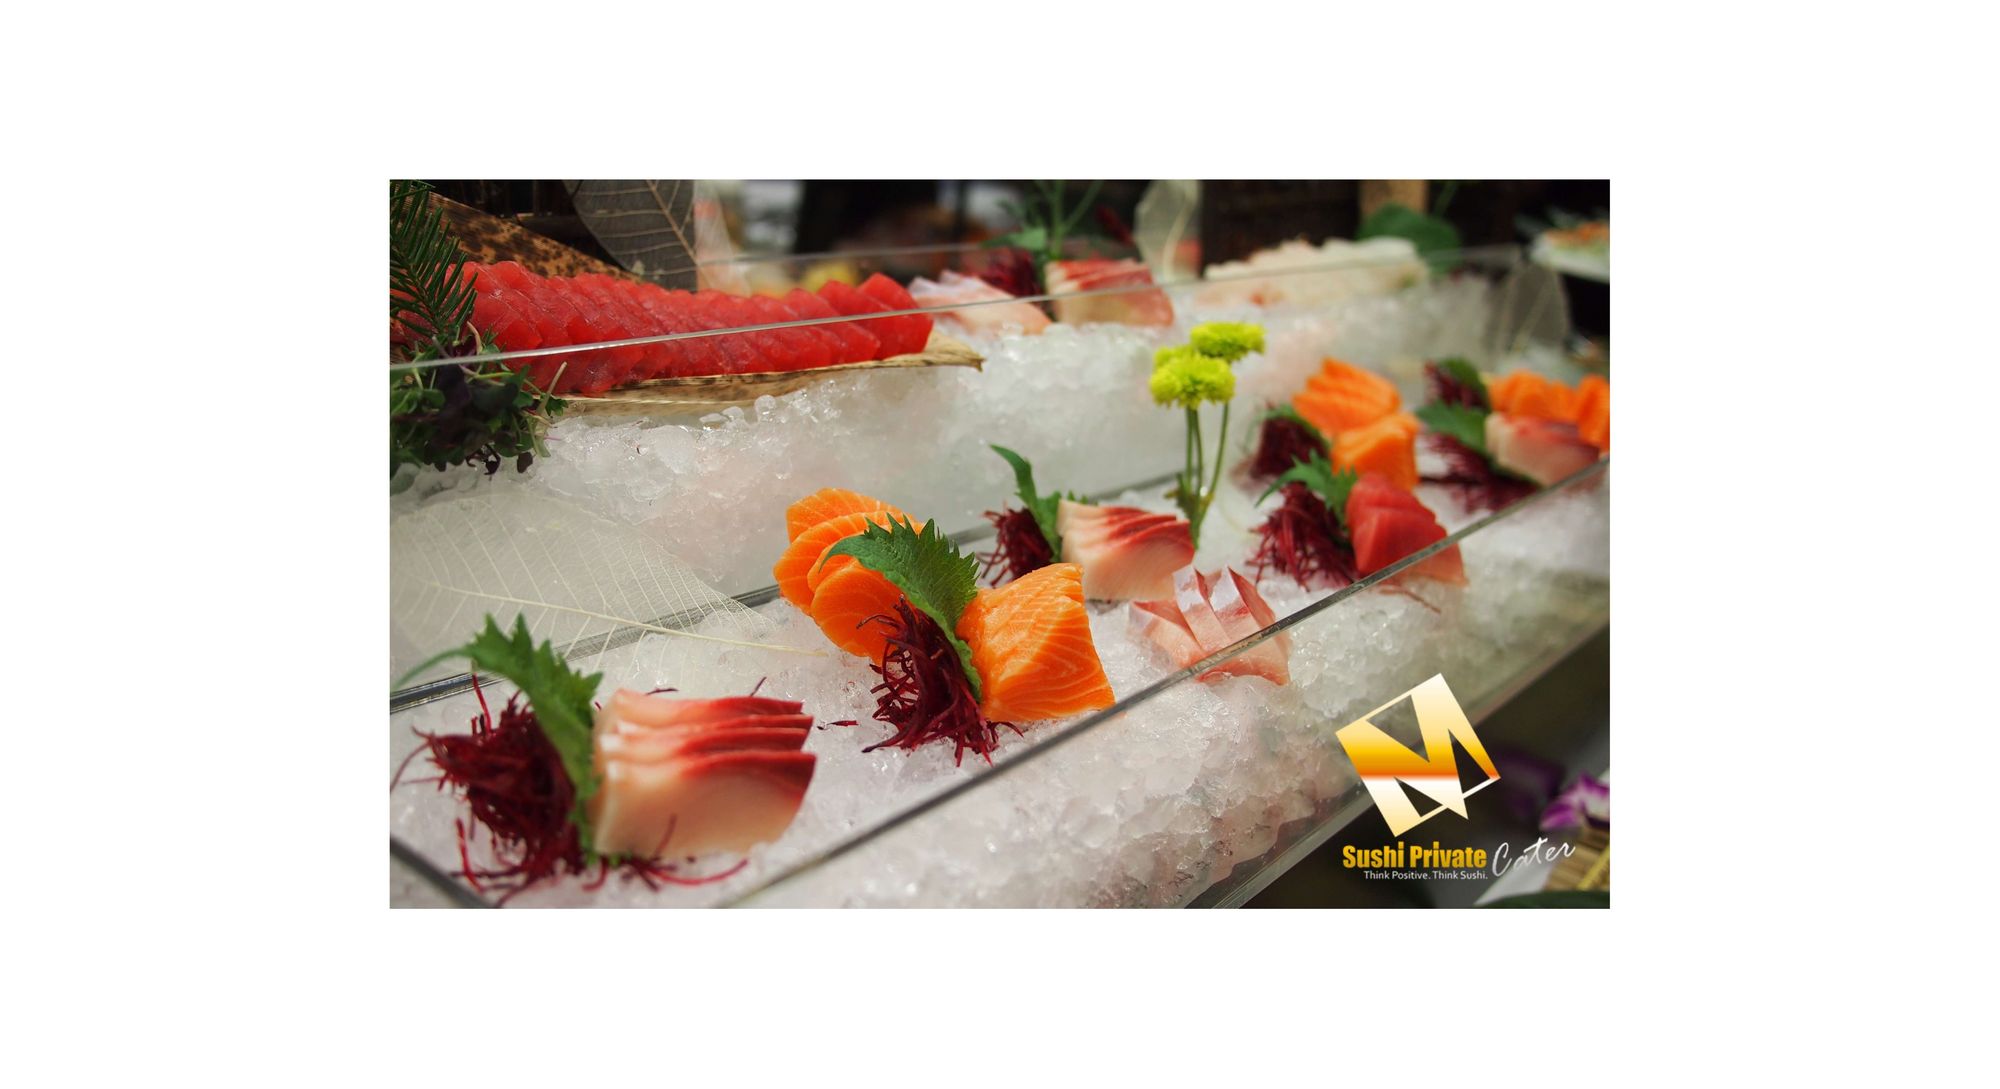 Creative Premium Quality Sushi - M's Sushi Private Catering